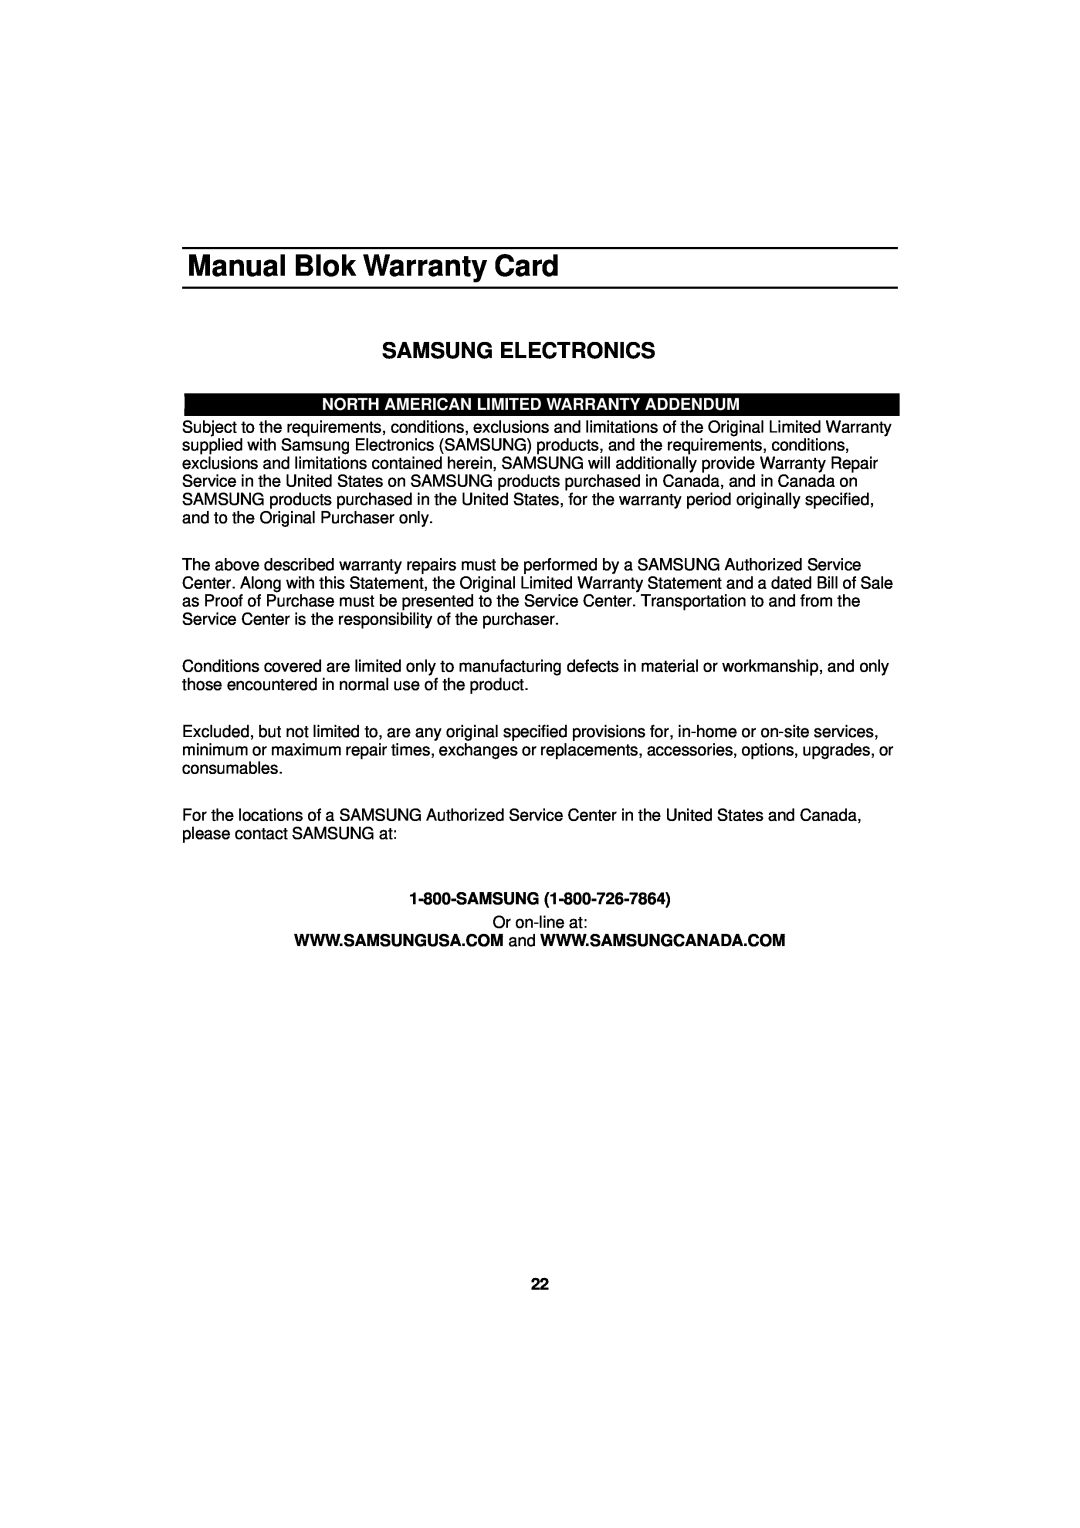 Samsung MW830BA manual Samsung Electronics, Manual Blok Warranty Card, North American Limited Warranty Addendum 